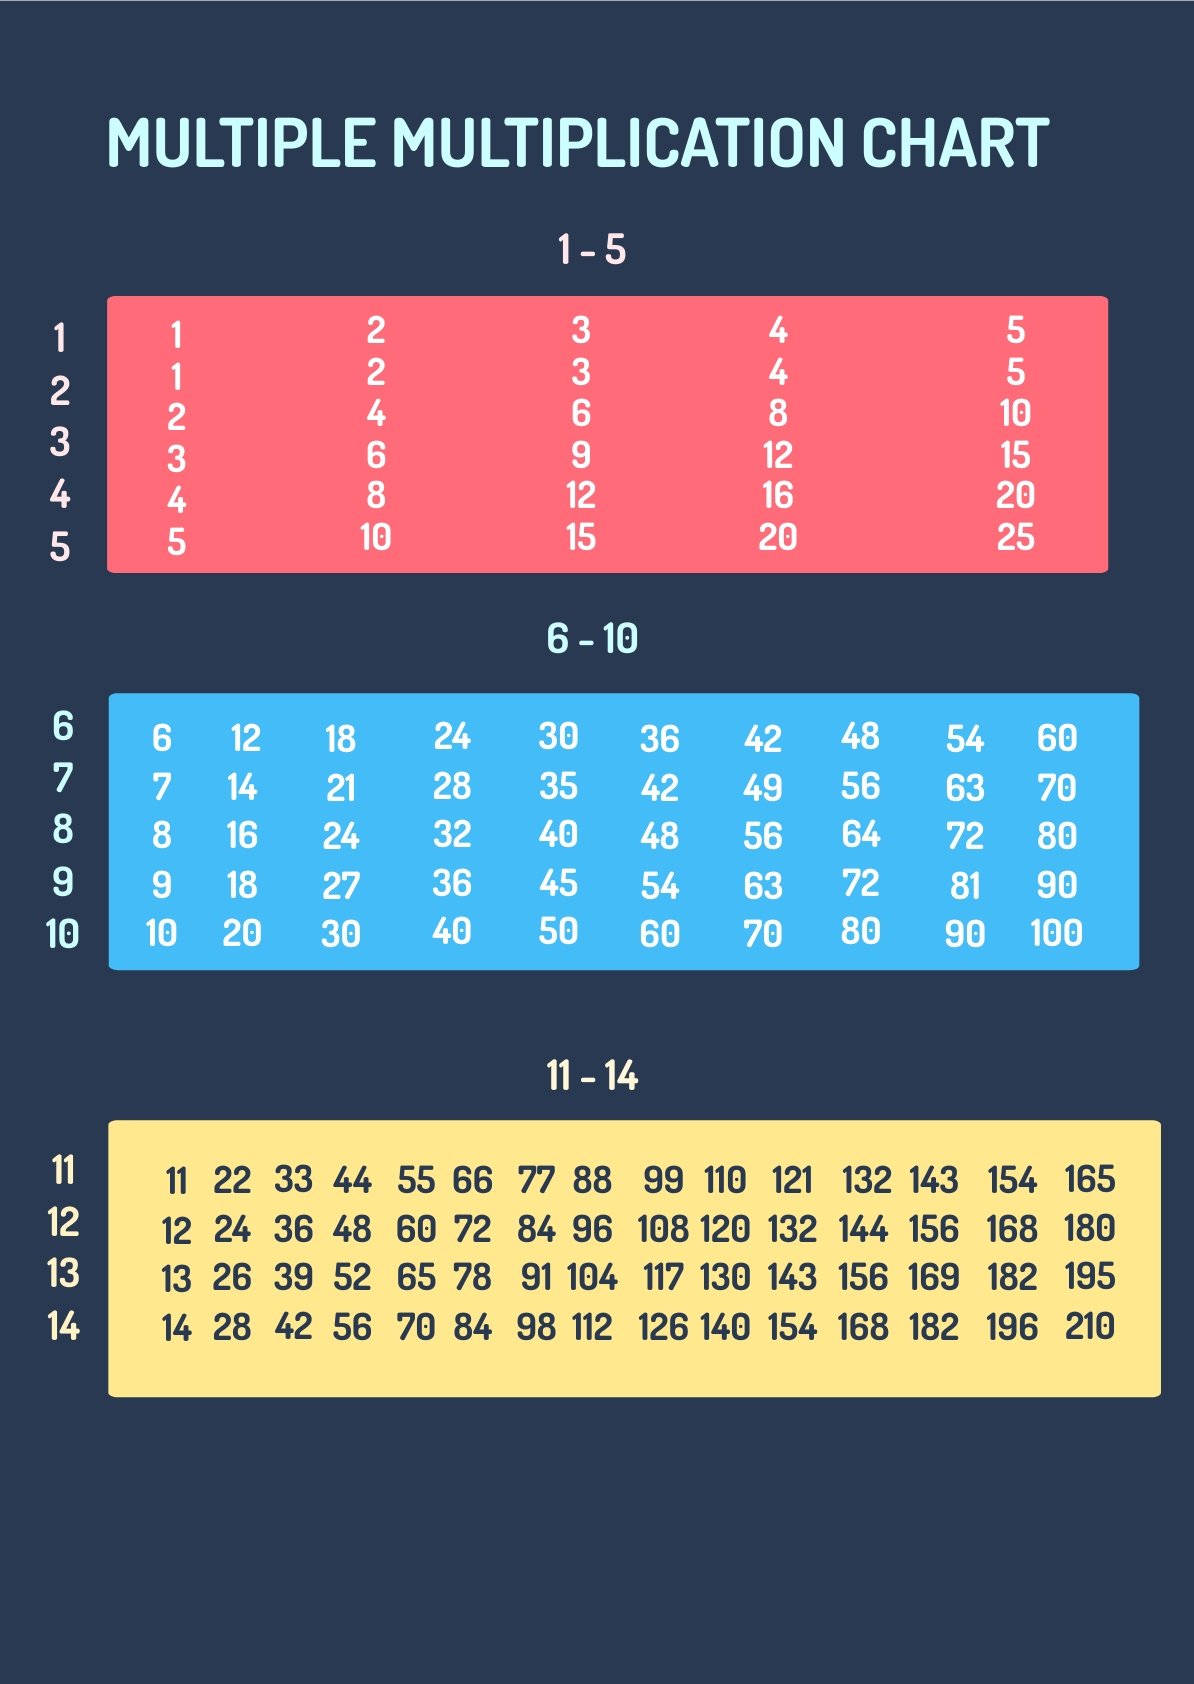 multiple-multiplication-chart-in-pdf-illustrator-download-template